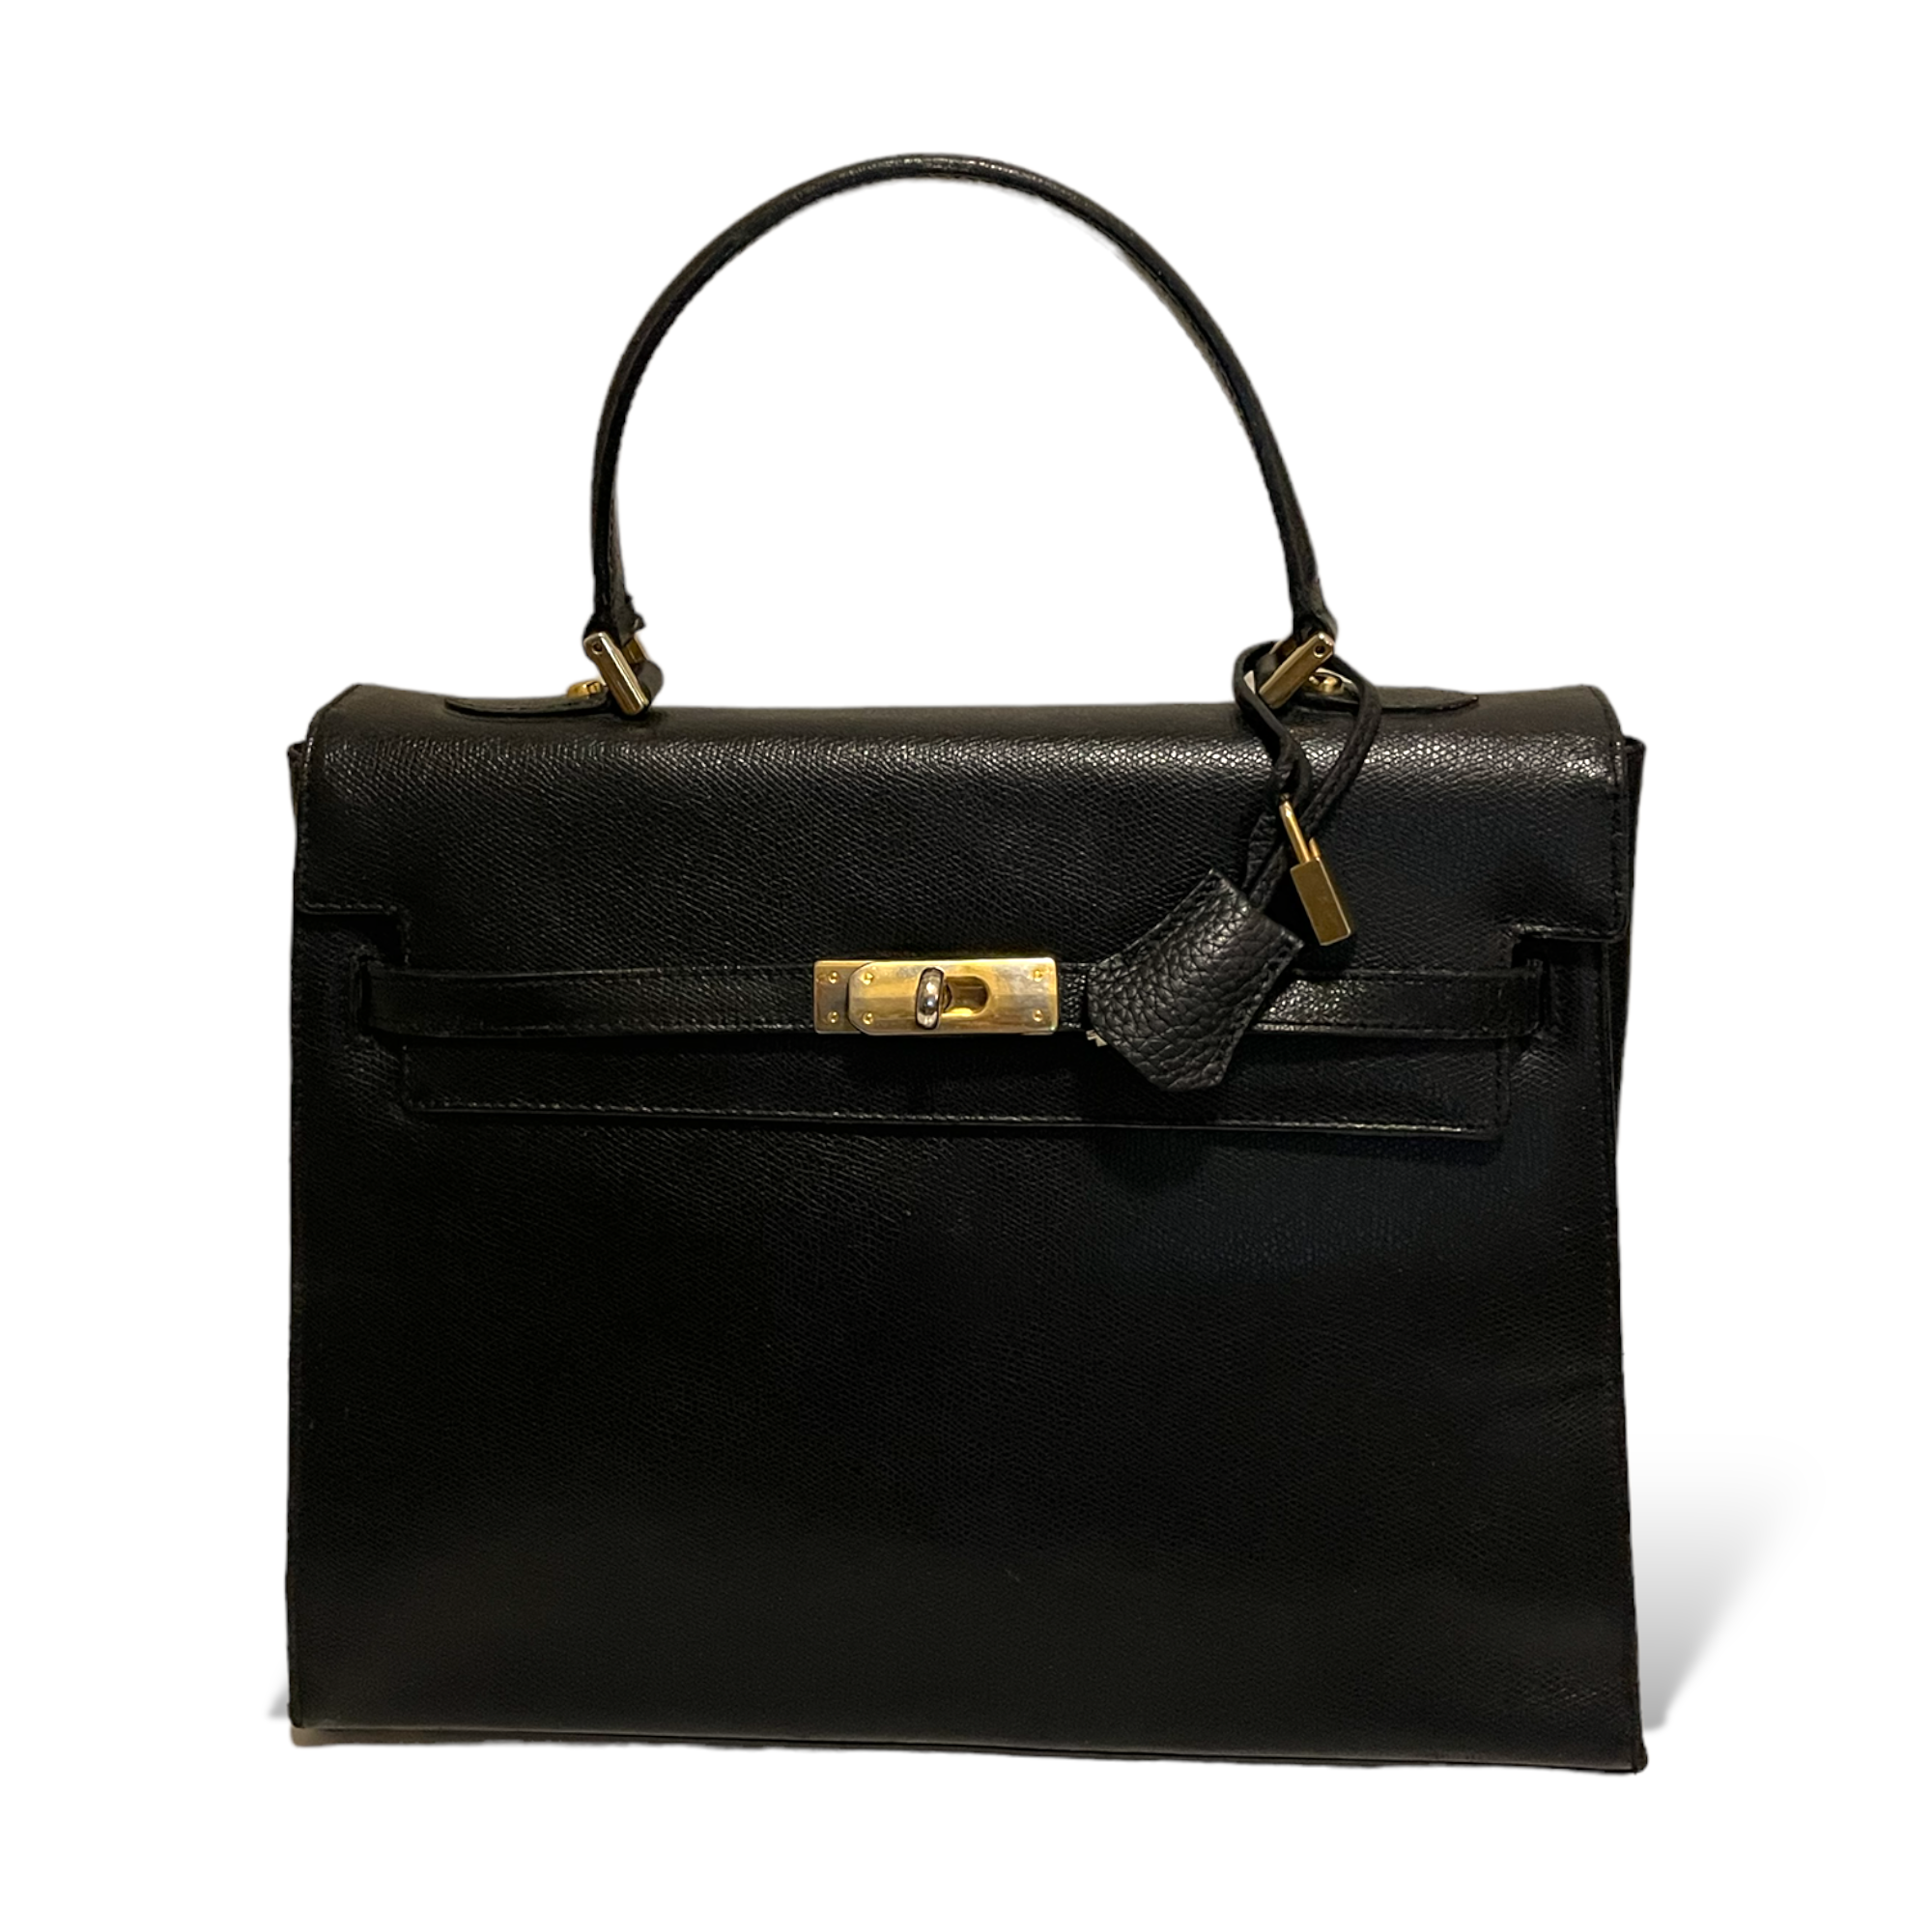 Saks Fifth Avenue Hermès Bag Store | website.jkuat.ac.ke